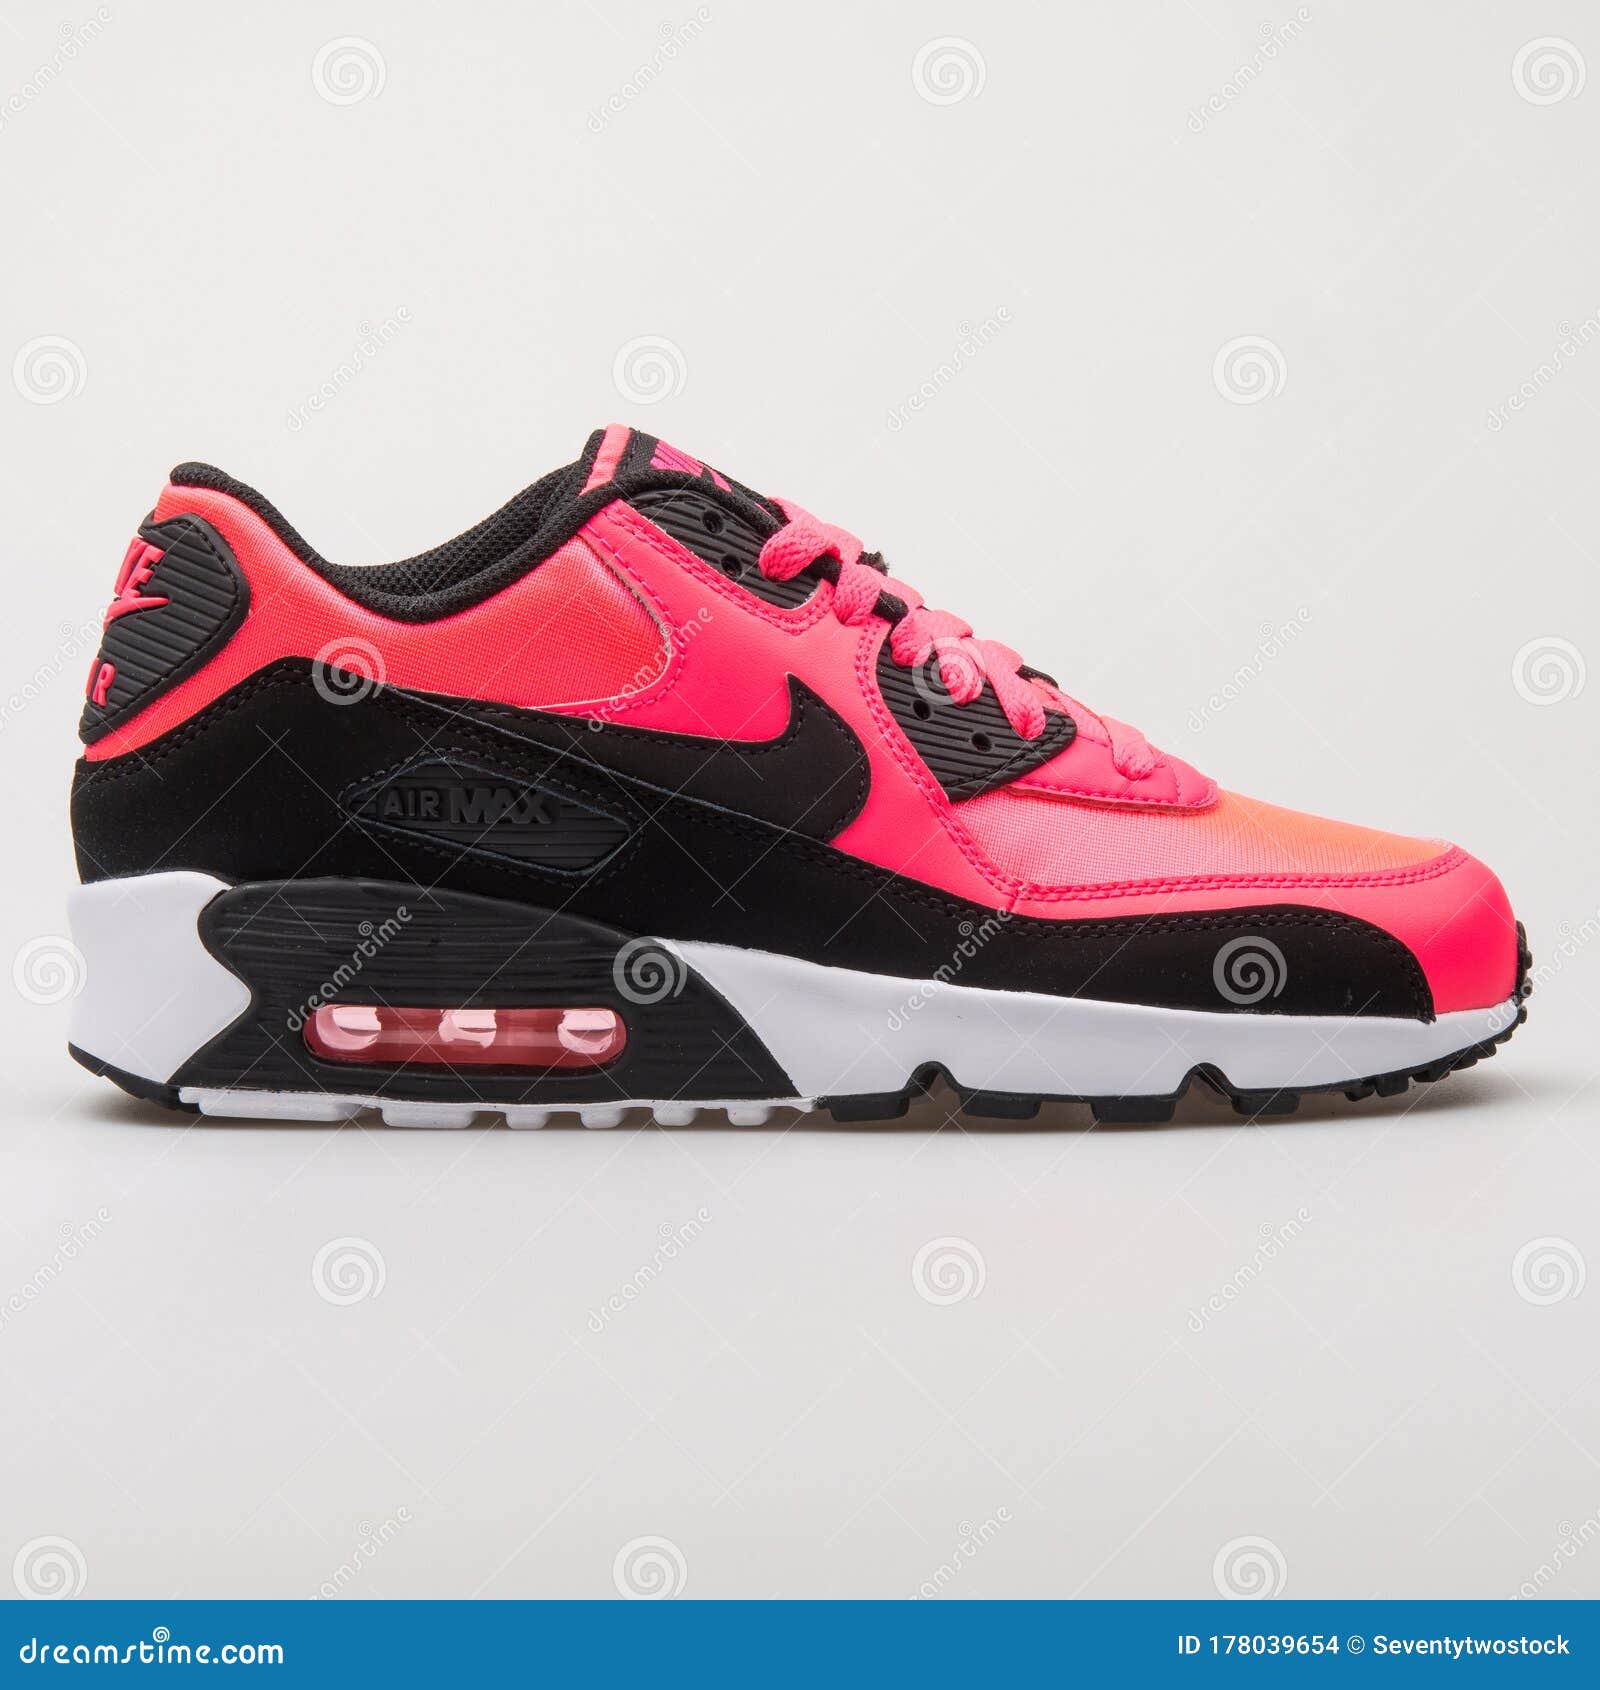 Nike Air Max 90 Mesh Pink, Black White Sneaker Stock Image - Image of sneaker: 178039654